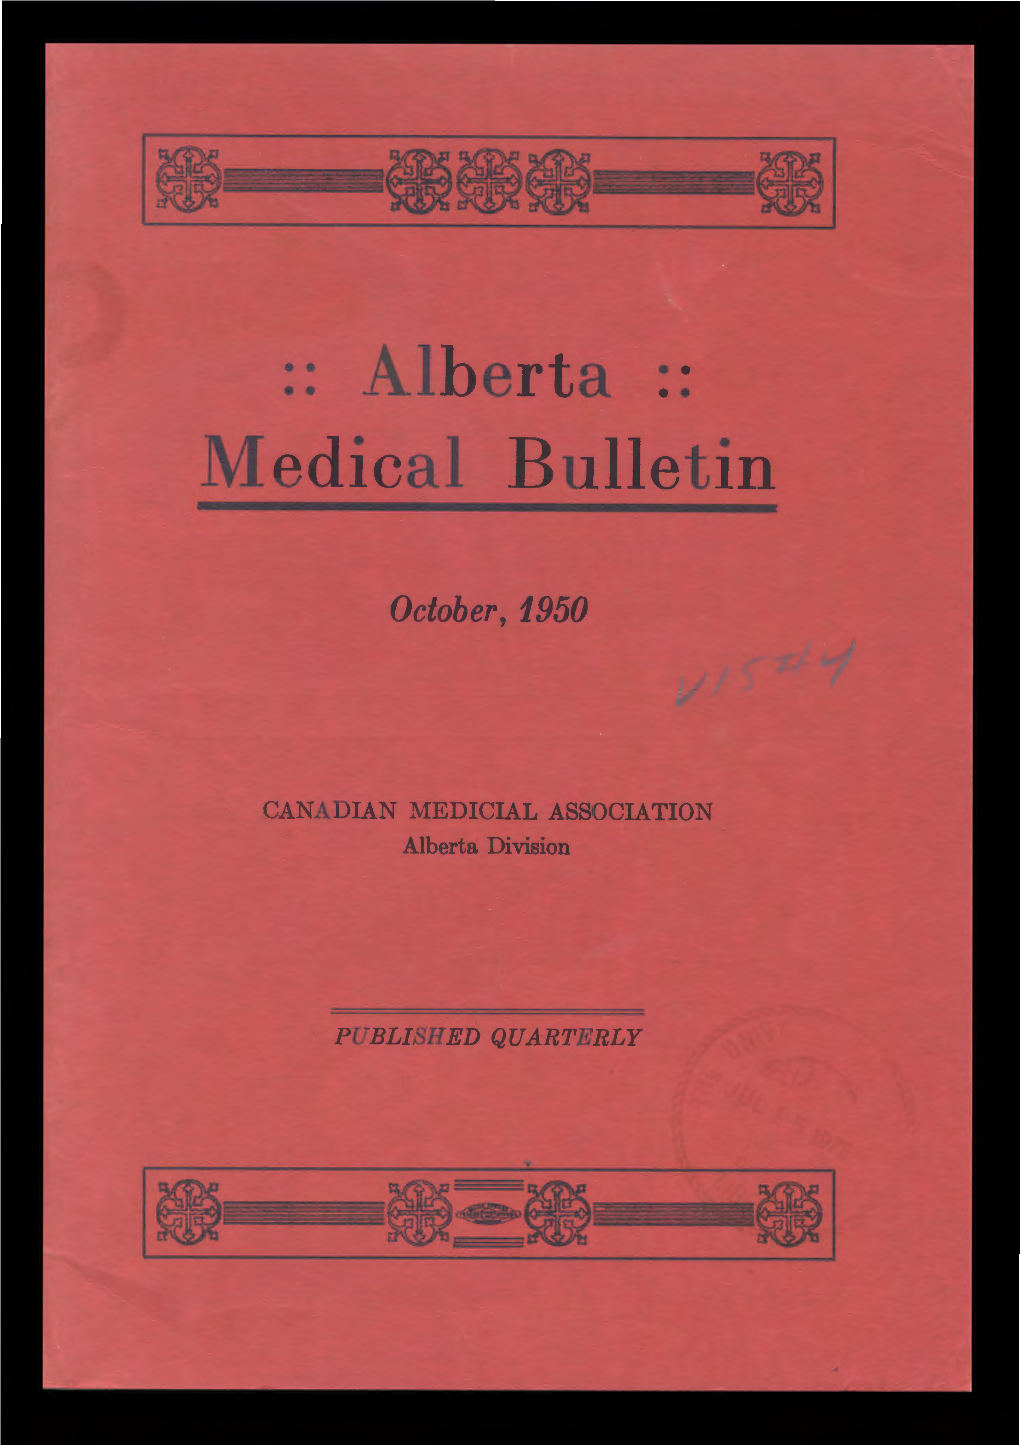 • • Alberta • • Medical Bulletin